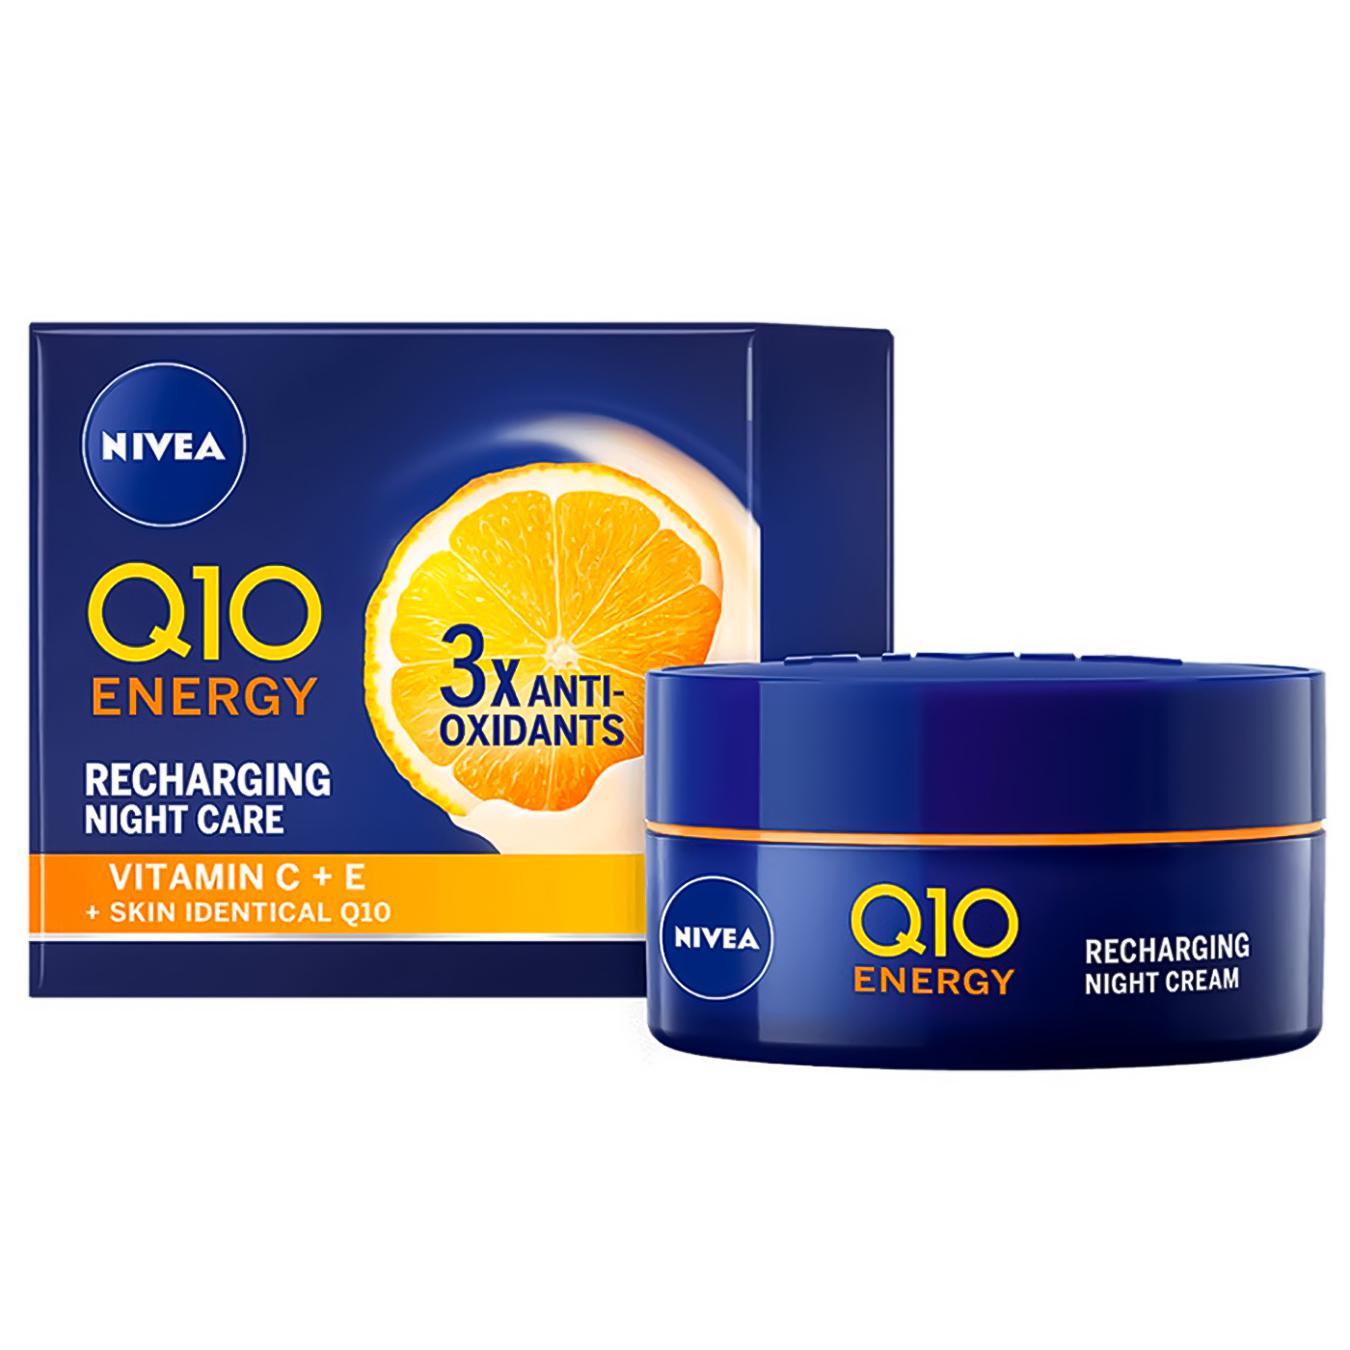 Night cream Nivea Q10 energy energy recovery 50ml